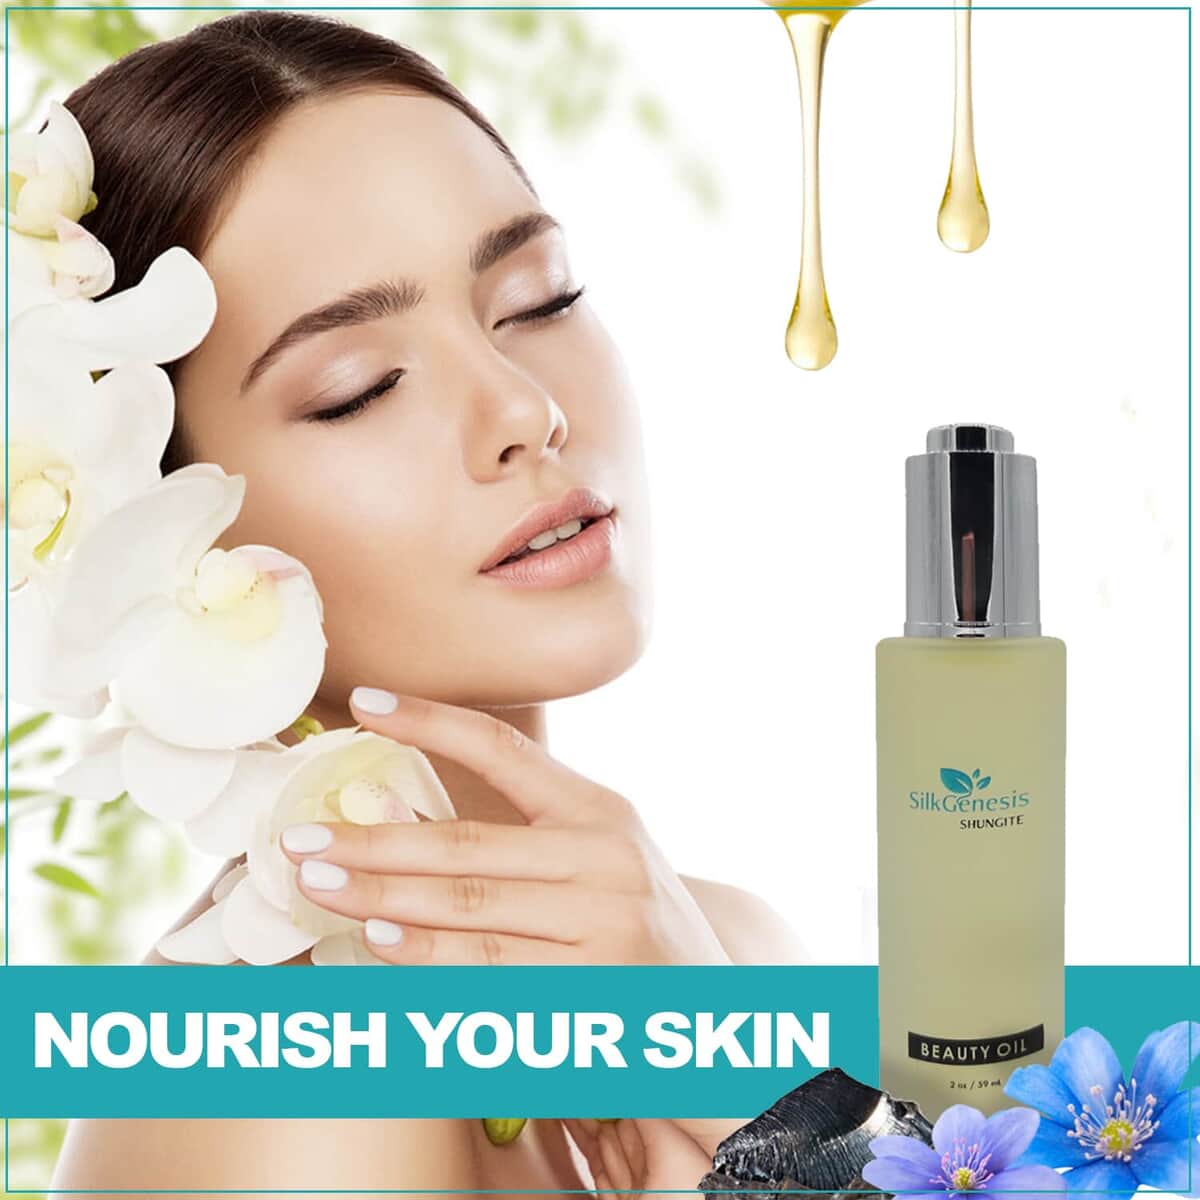 Silk Genesis Shungite Beauty Oil, Oil For Glowing Skin, Dry Skin Moisturizing, Skin Nourishment Oil 2 oz image number 3